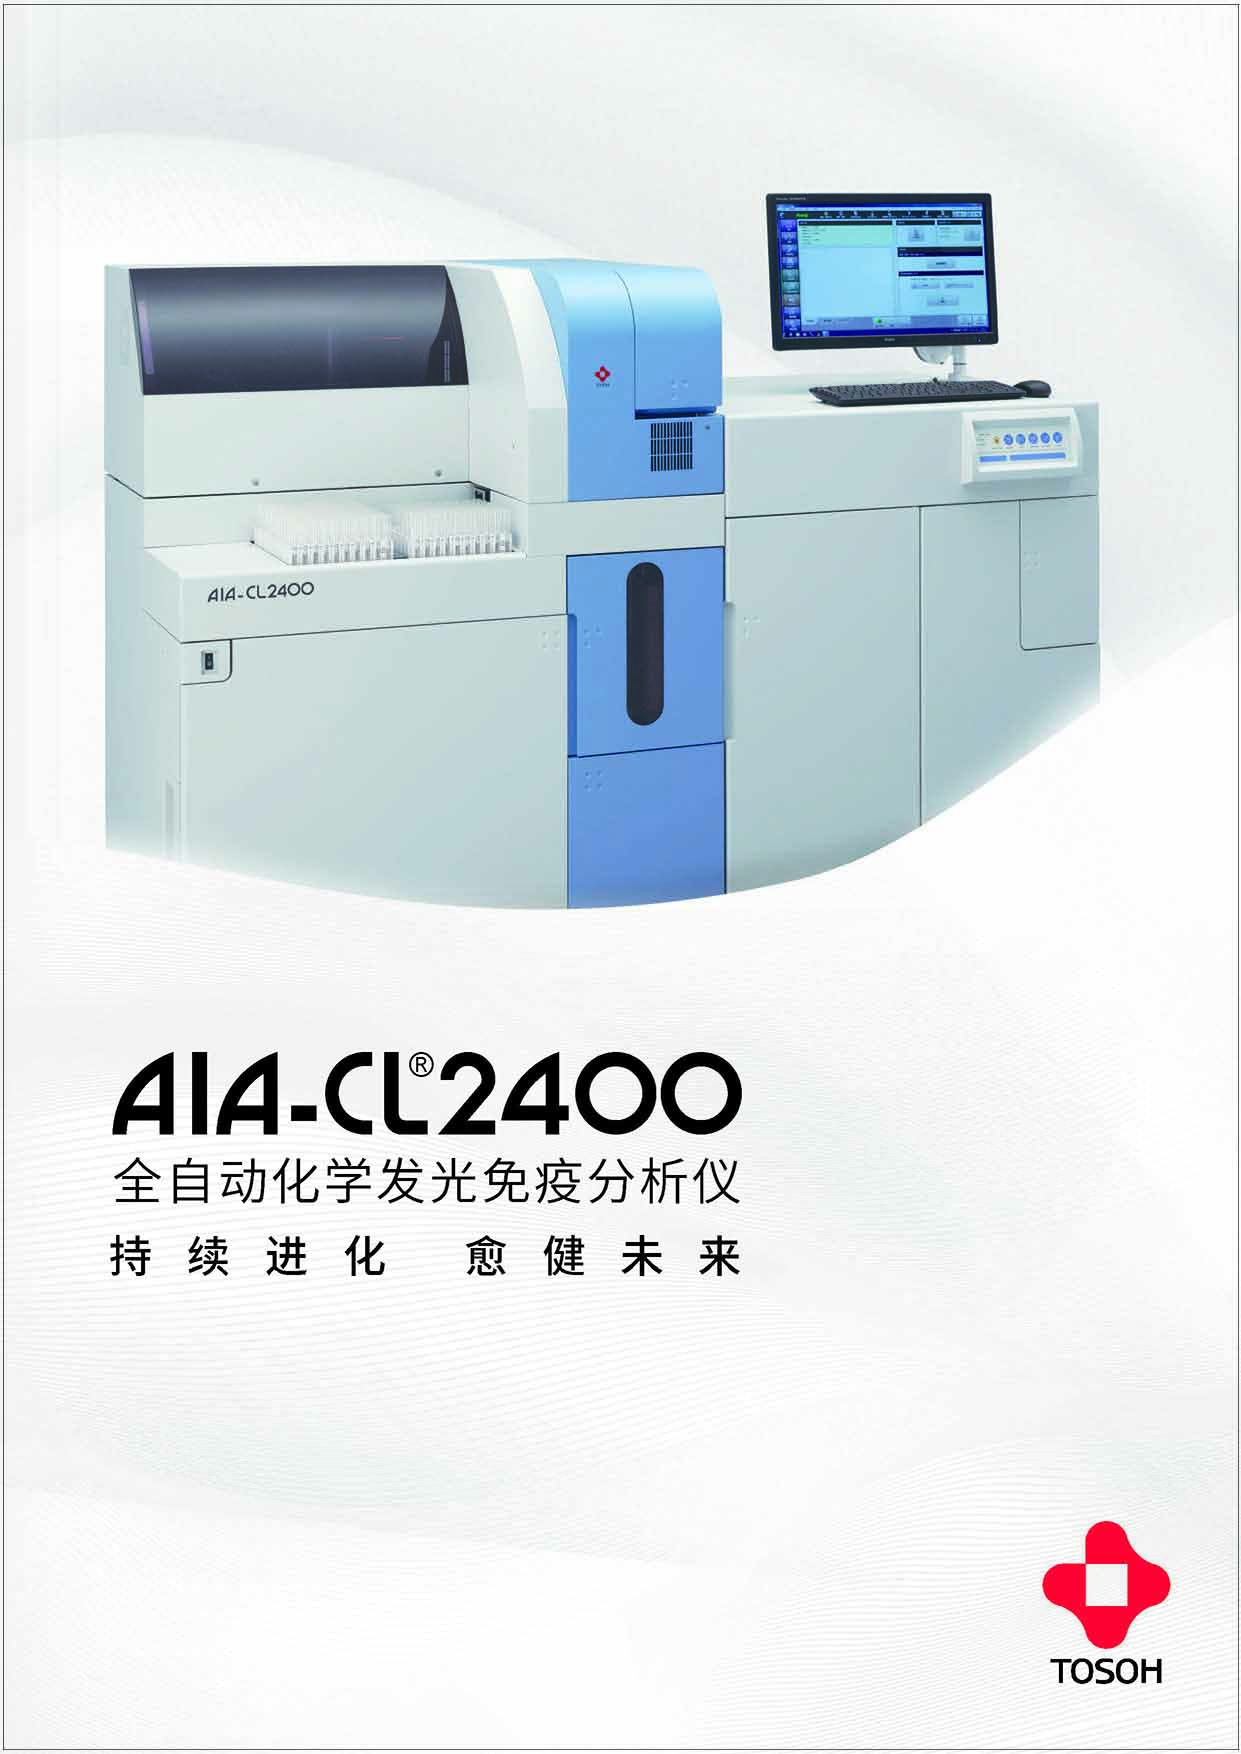 CL-2400 Brochure.jpg